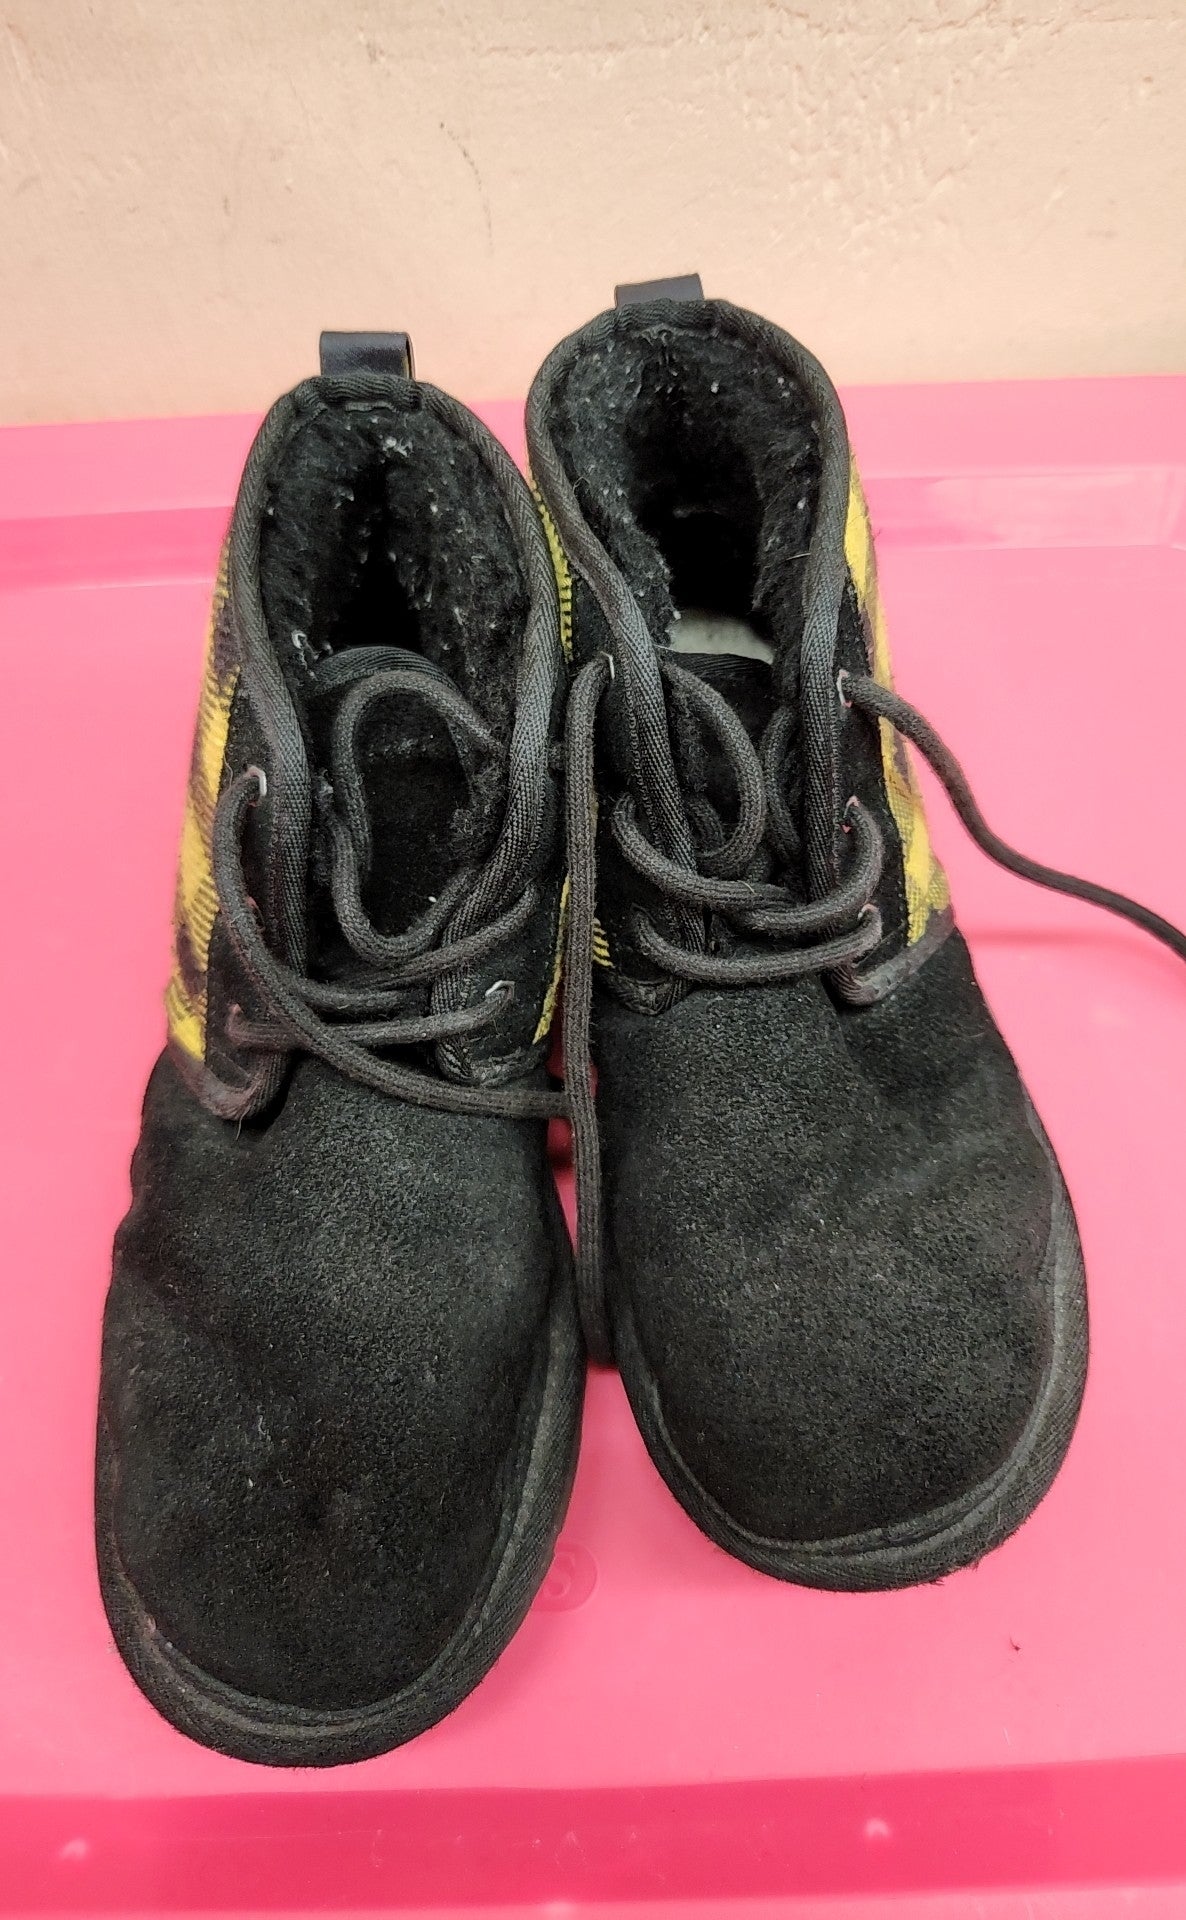 Ugg Boy's Size 6 Black Boots